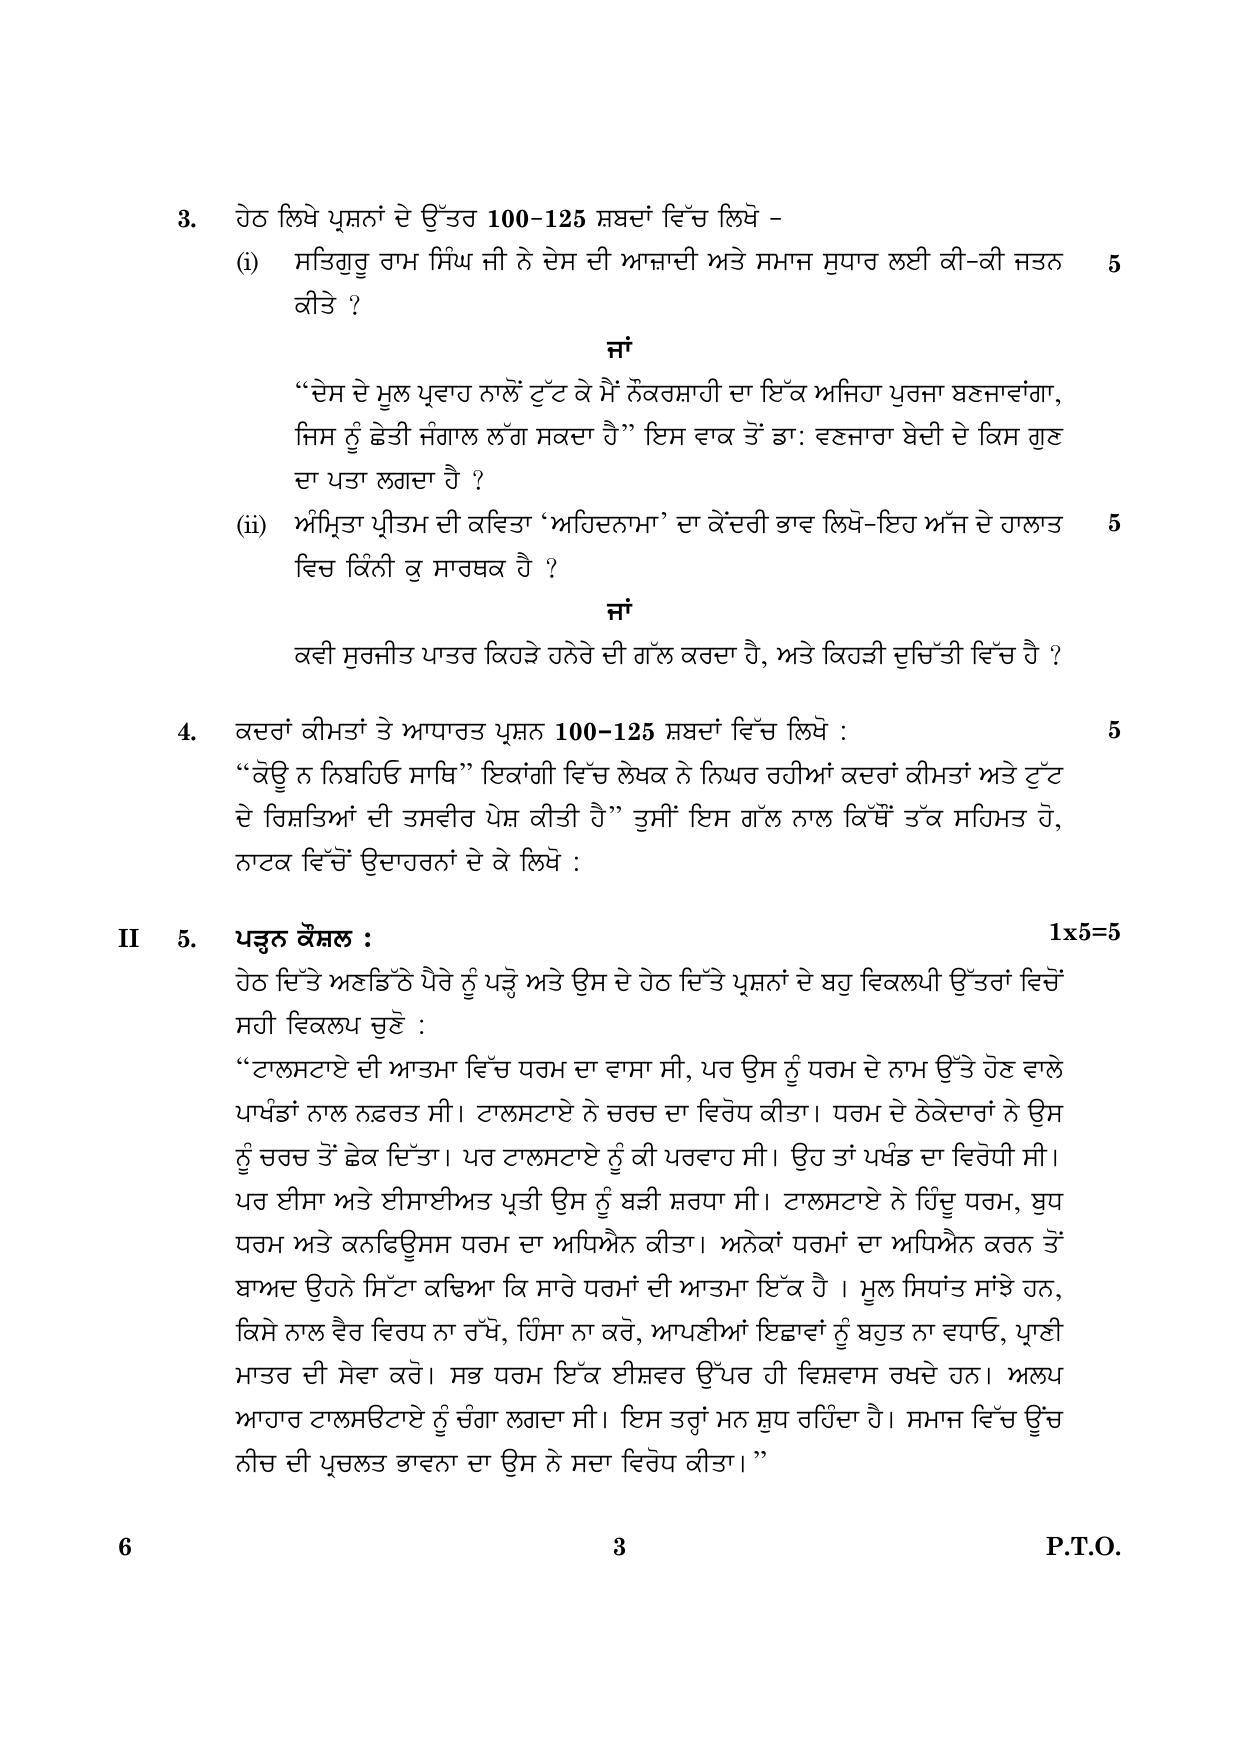 CBSE Class 10 006 Punjabi 2016 Question Paper - Page 3